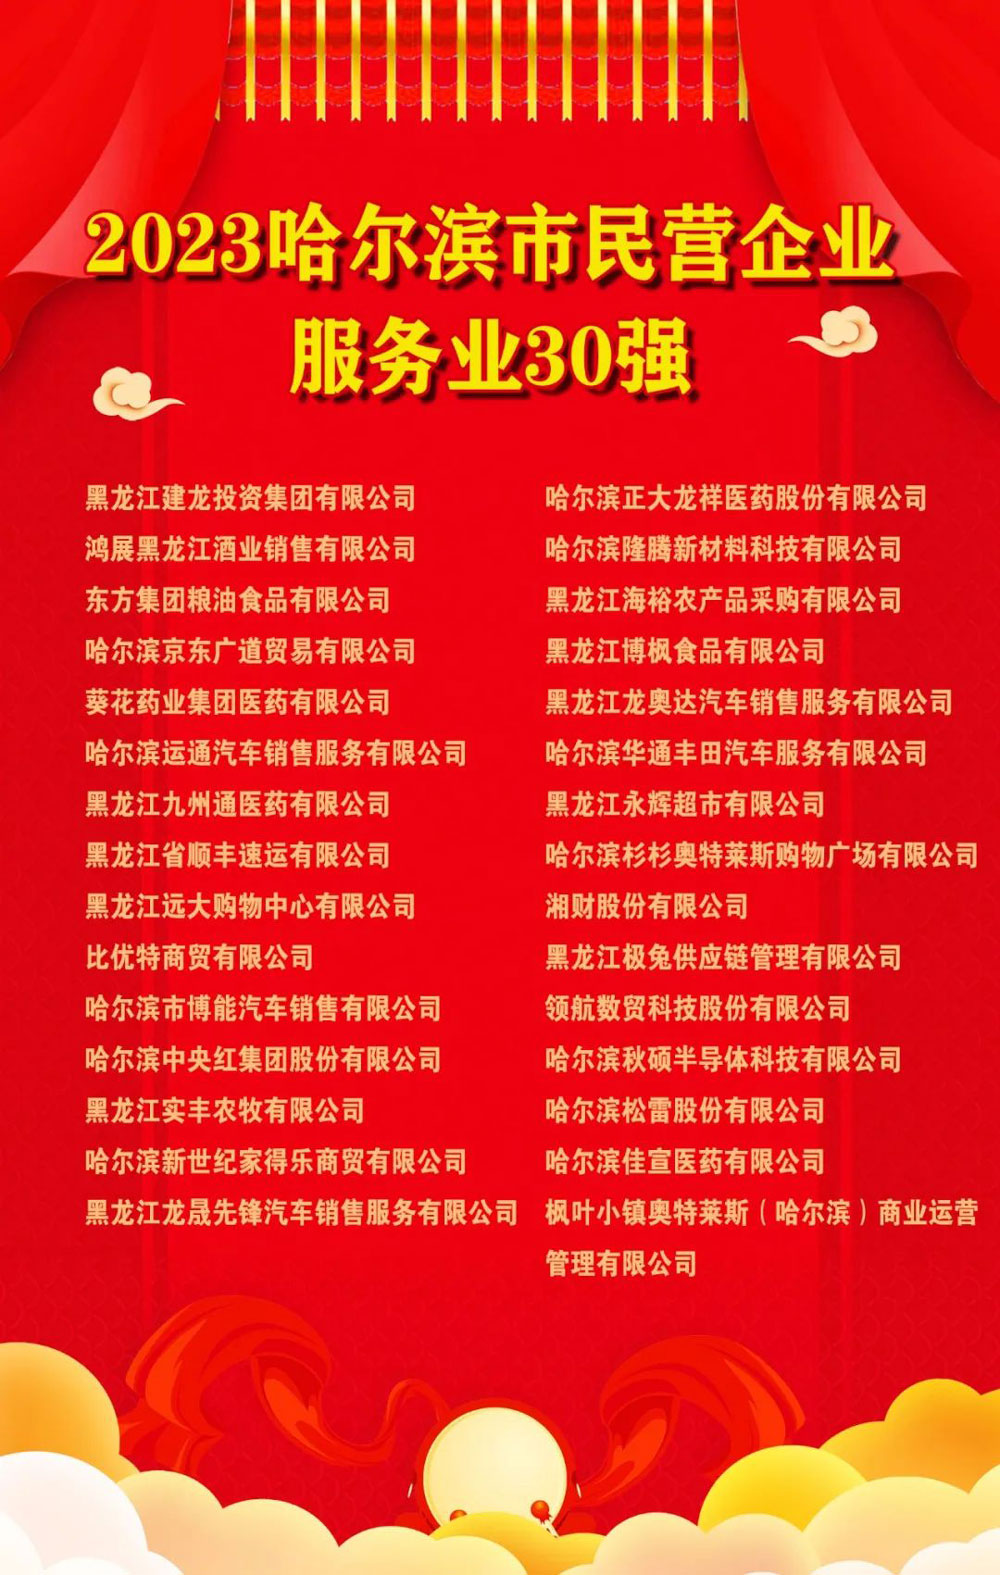 Heavyweight! Harbin Top 50 Private Enterprises List Released!